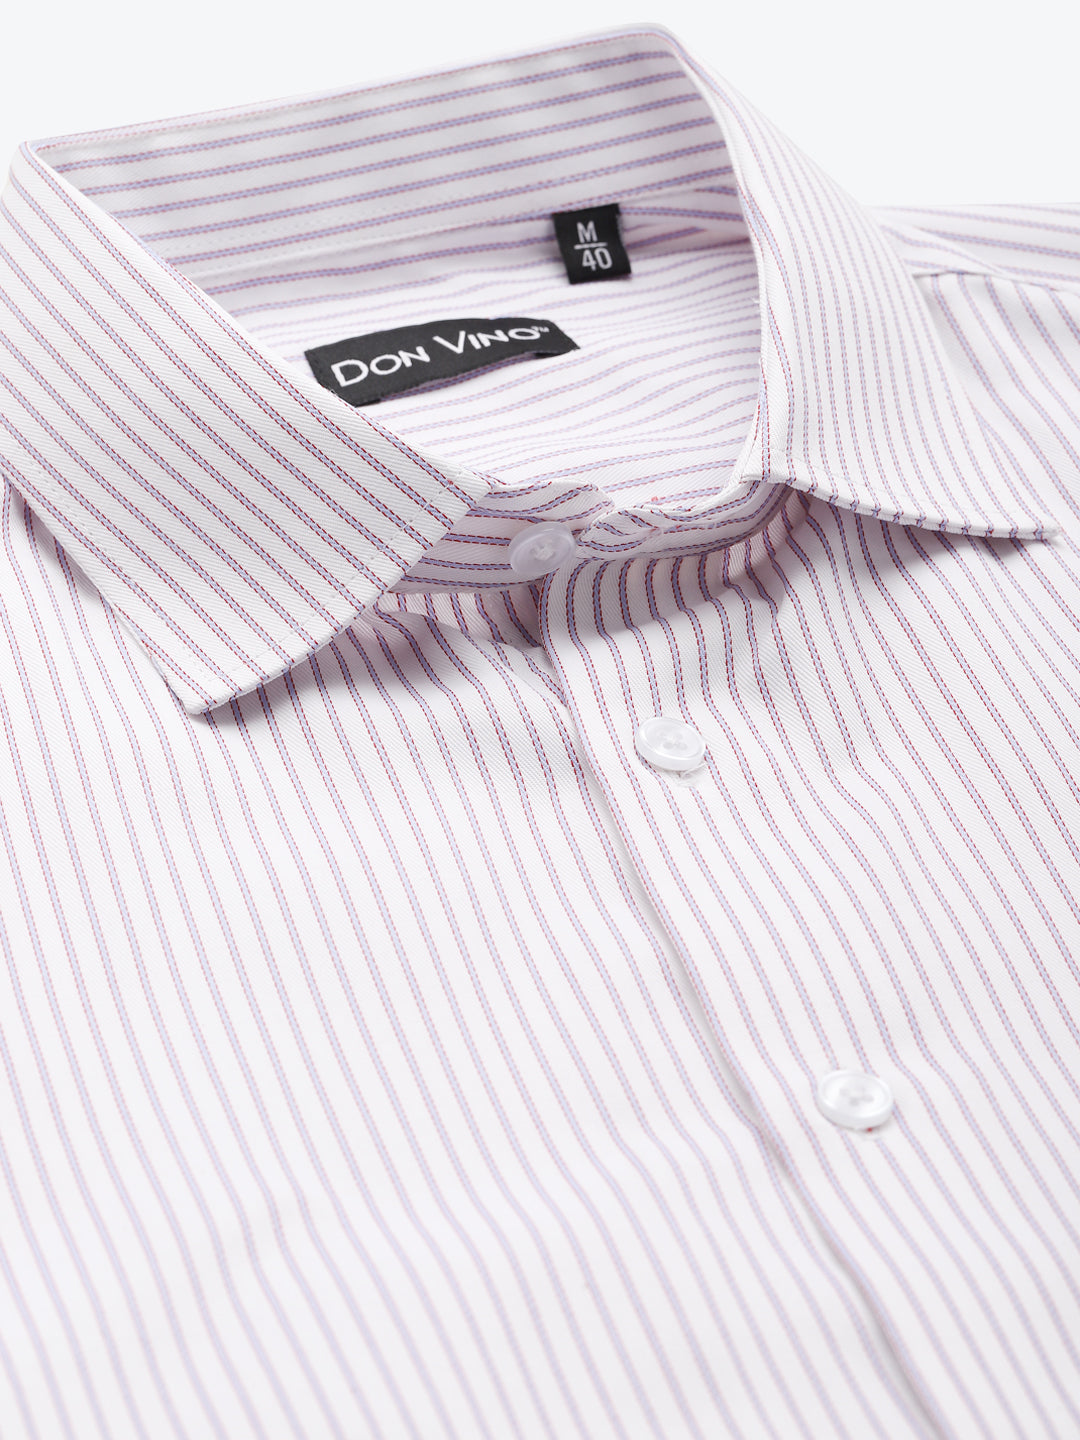 Don Vino Men's Lavender Stripes Formal Slim Fit Shirt